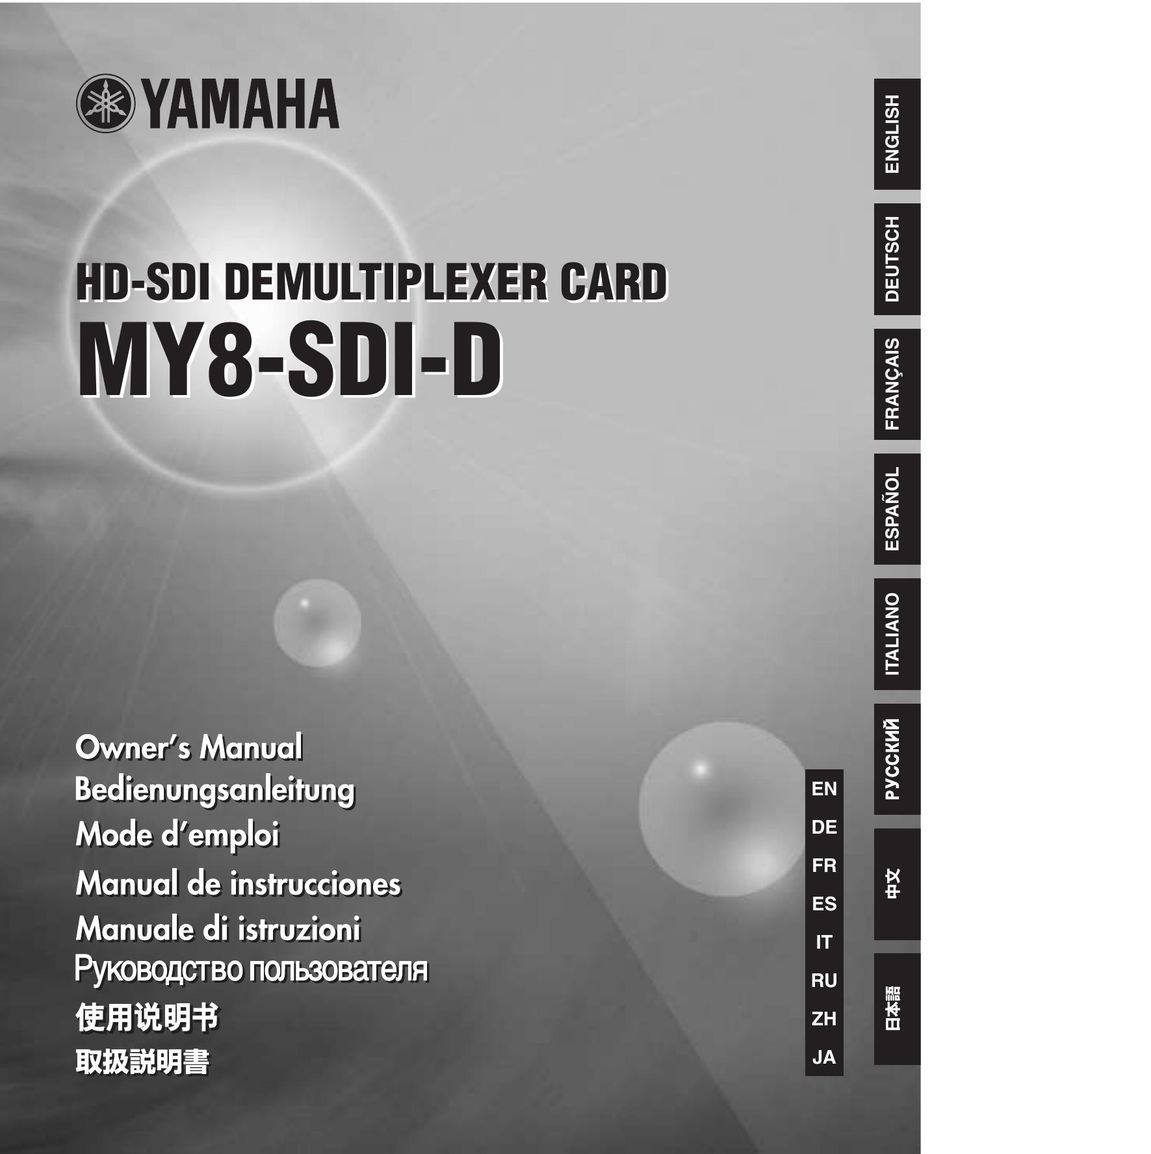 Yamaha MY8-SDI-D Network Card User Manual